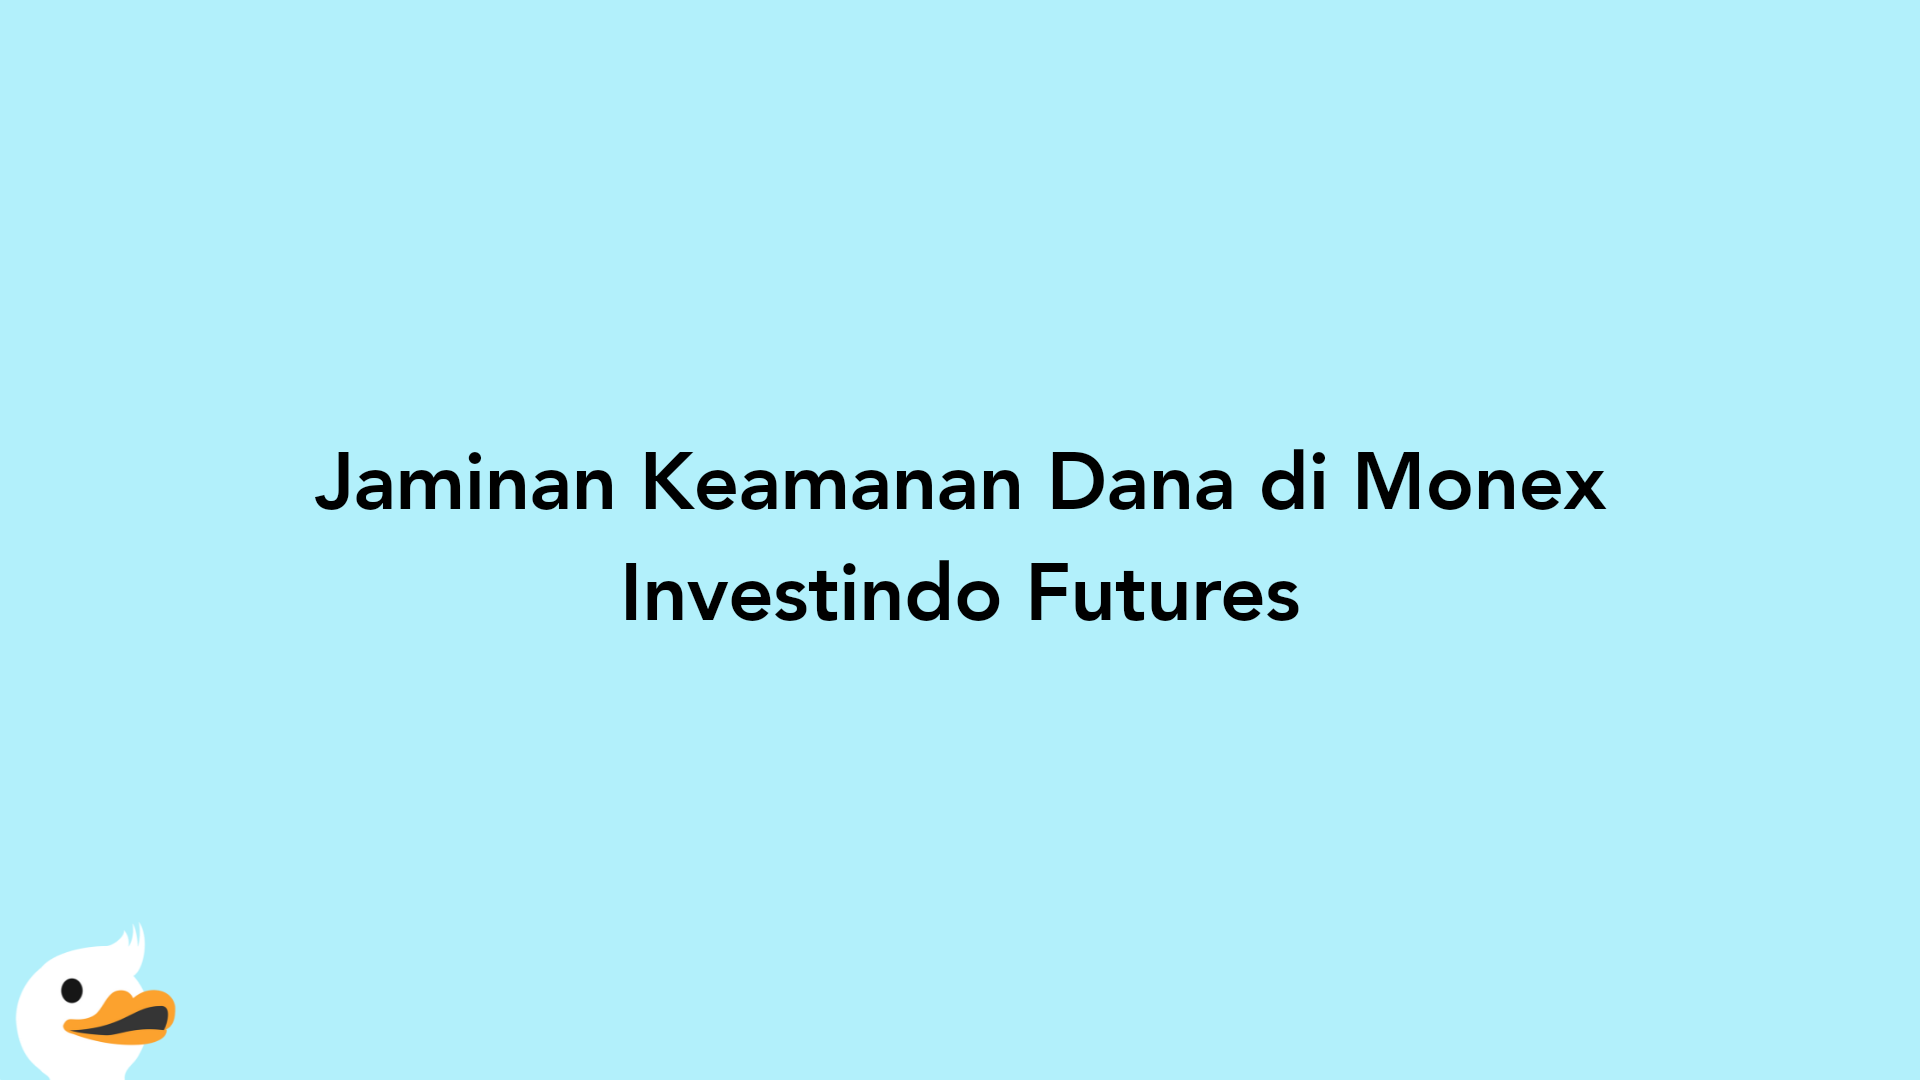 Jaminan Keamanan Dana di Monex Investindo Futures